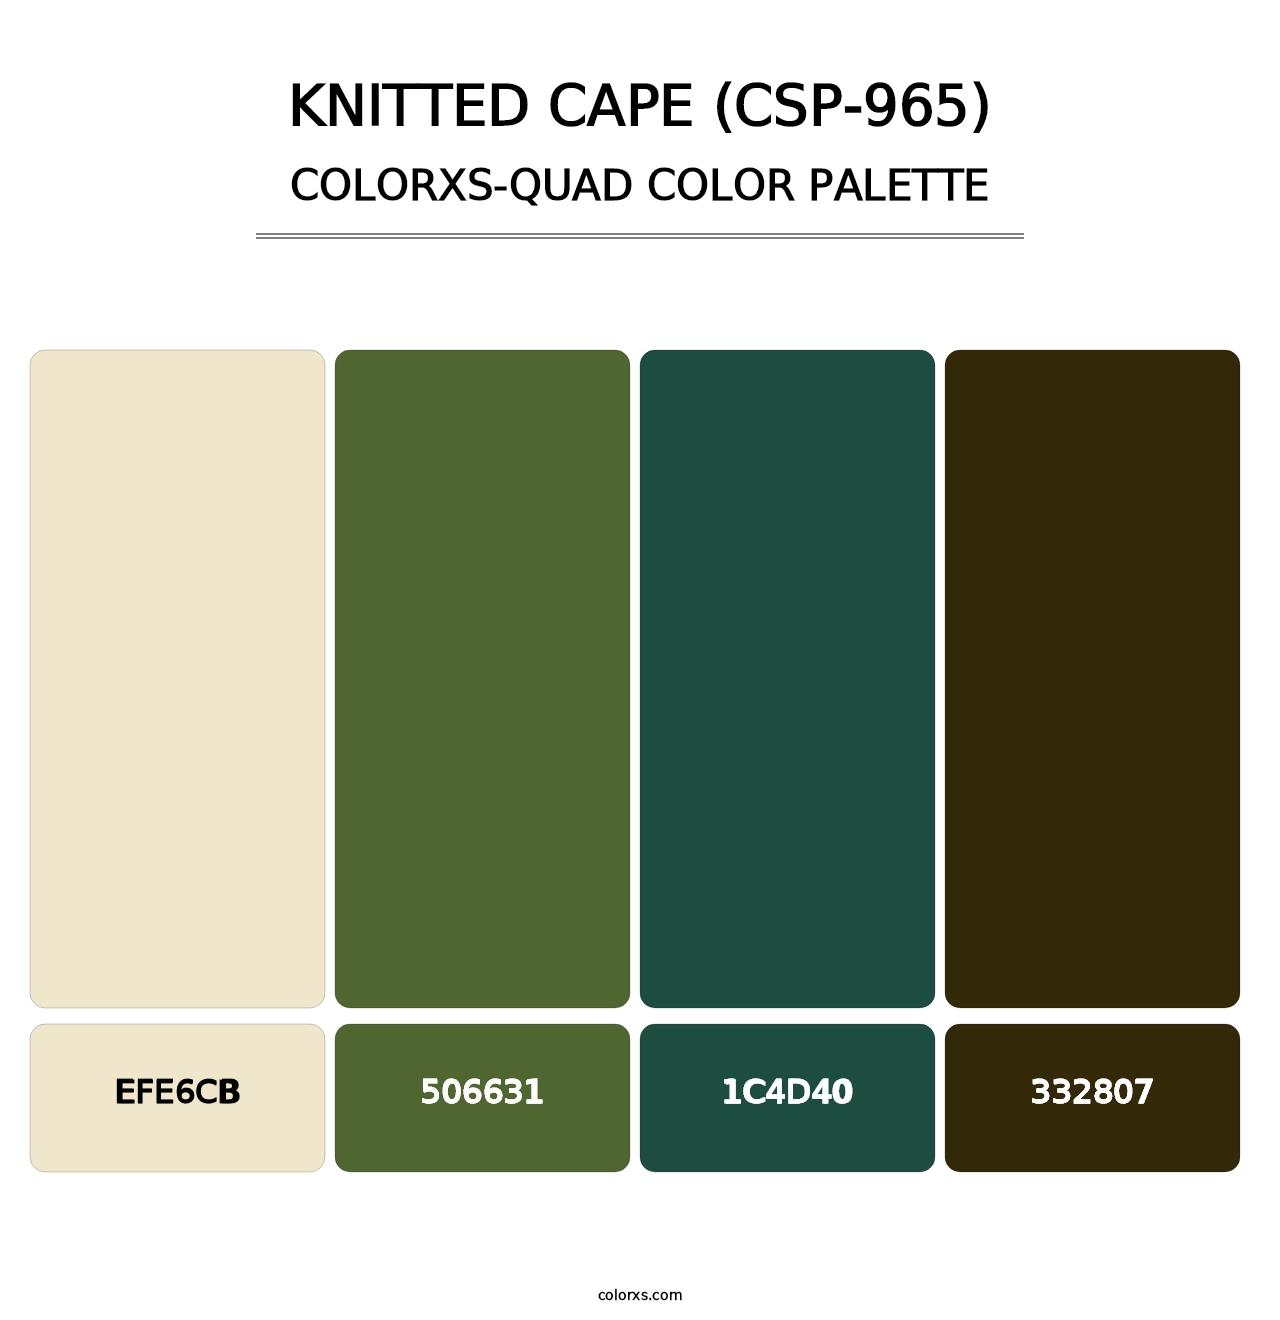 Knitted Cape (CSP-965) - Colorxs Quad Palette